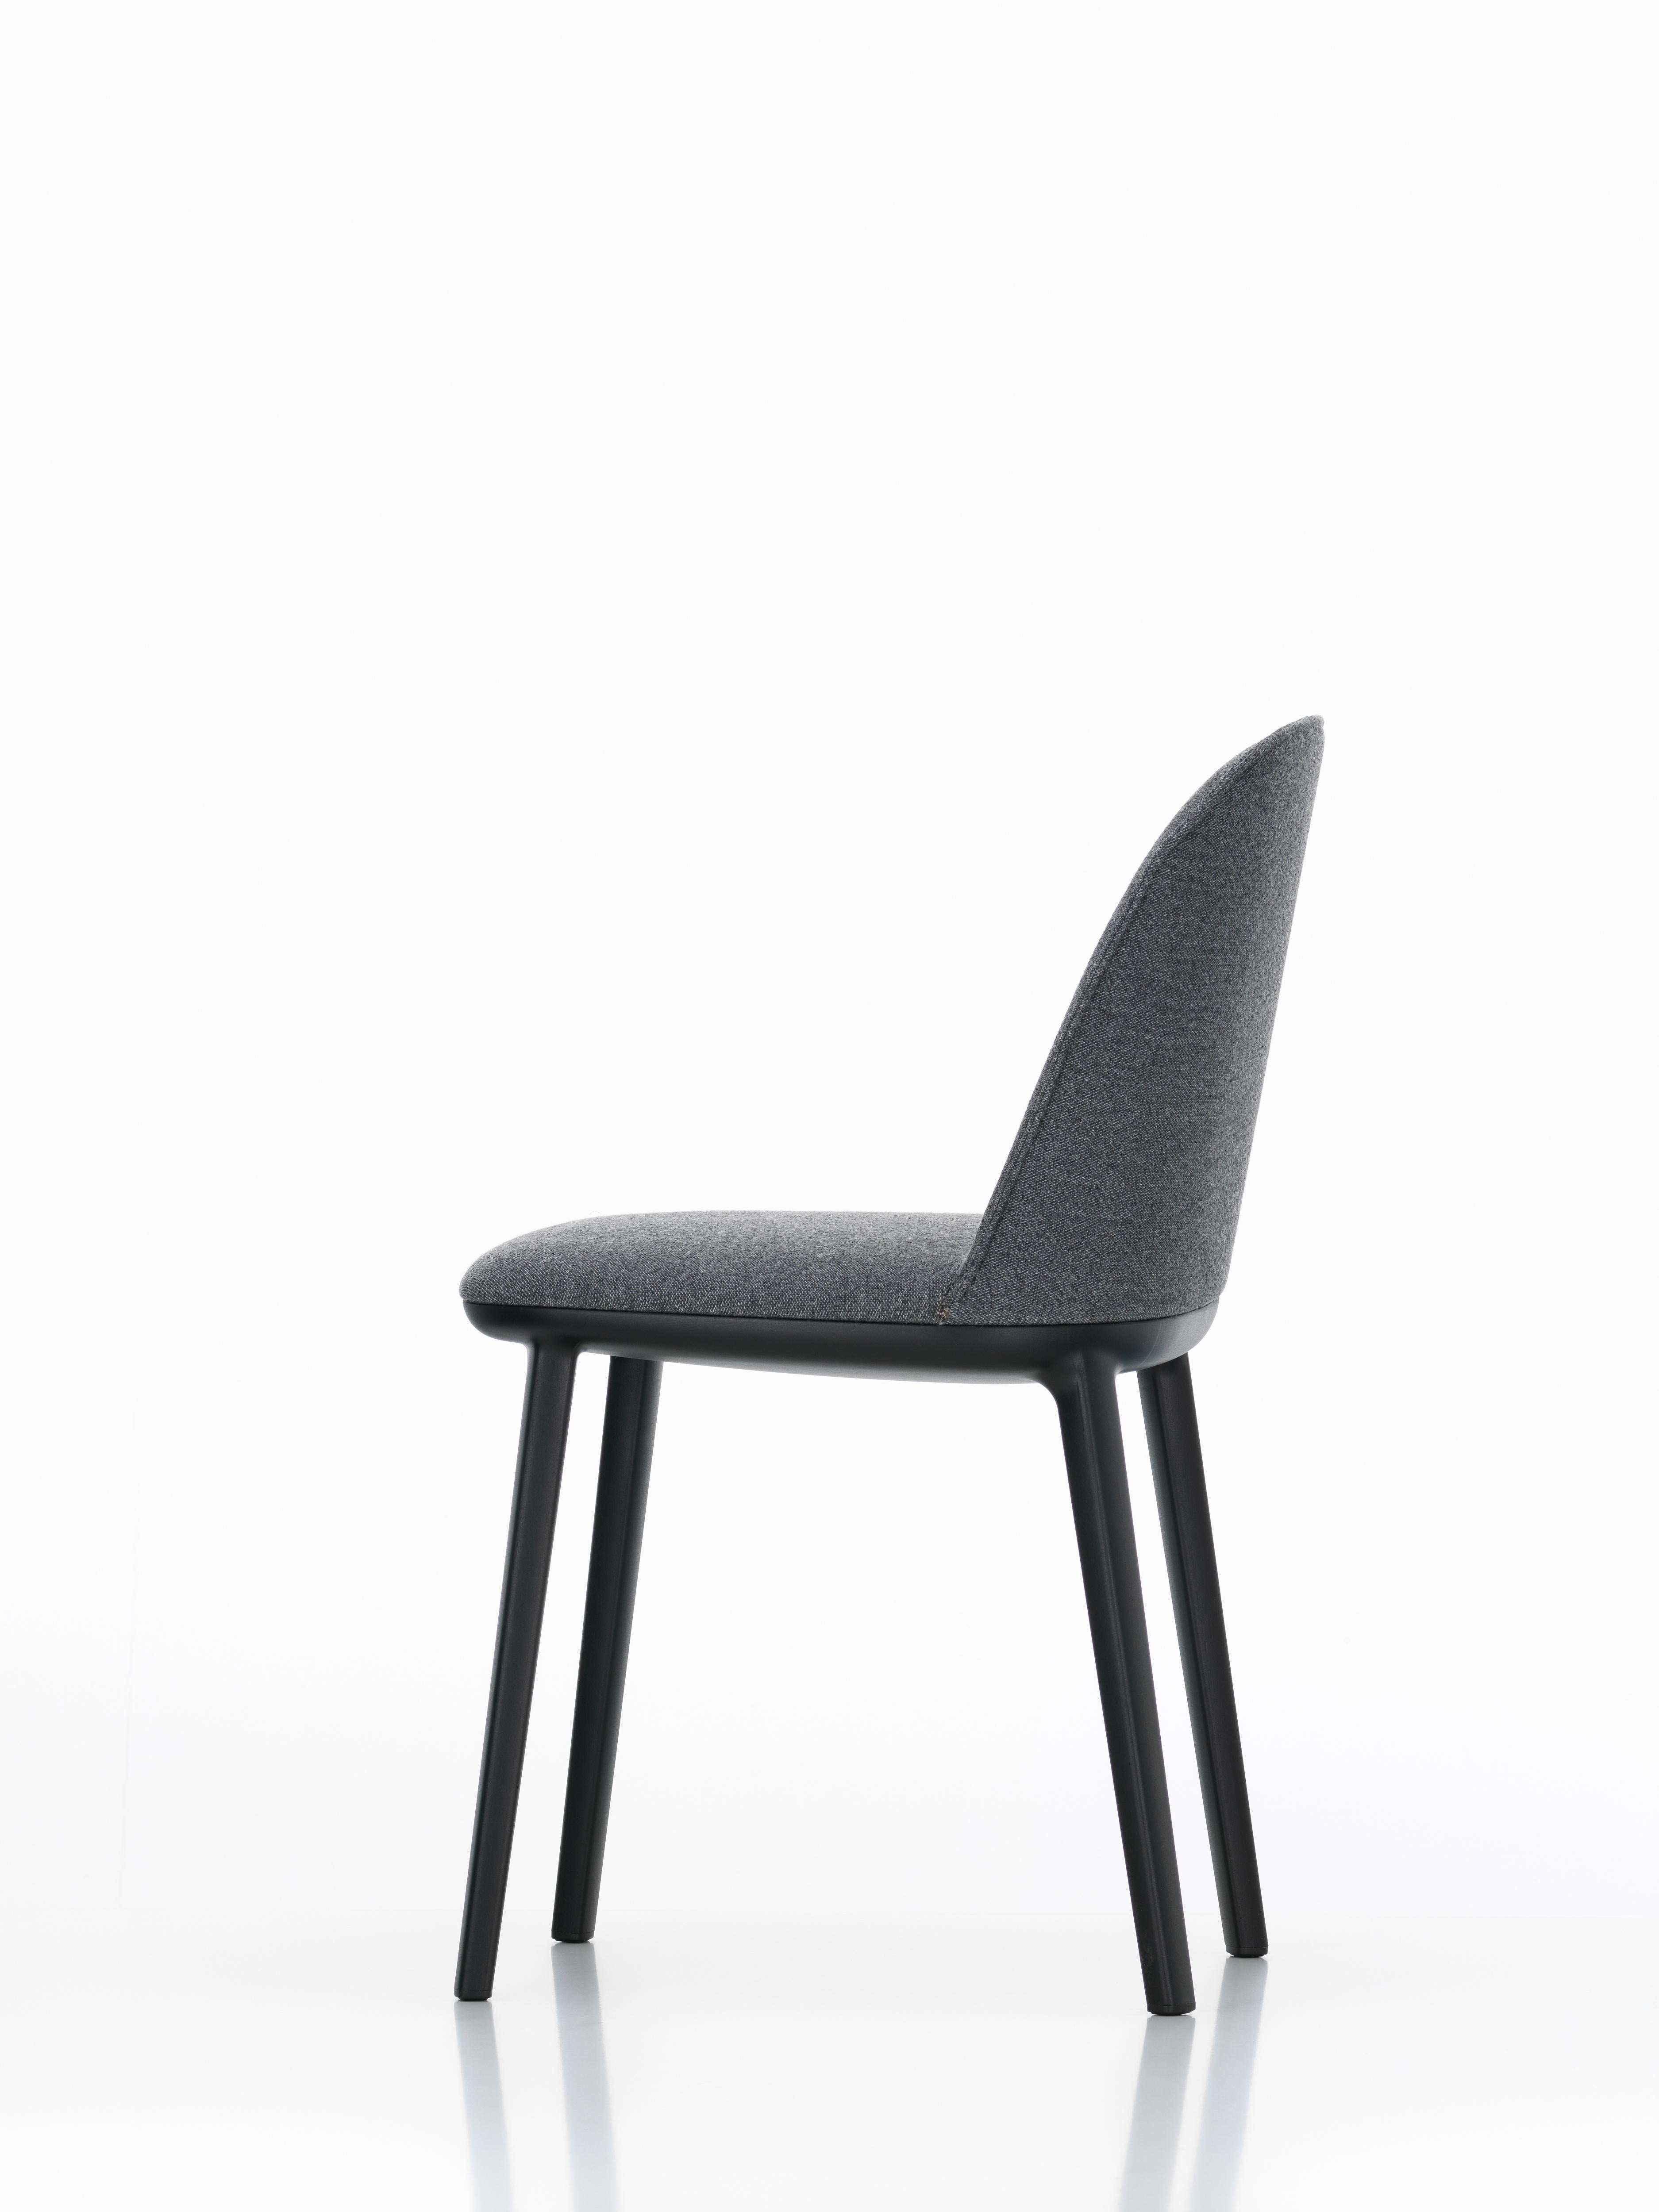 Swiss Vitra Softshell Side Chair in Dark Grey Plano by Ronan & Erwan Bouroullec For Sale